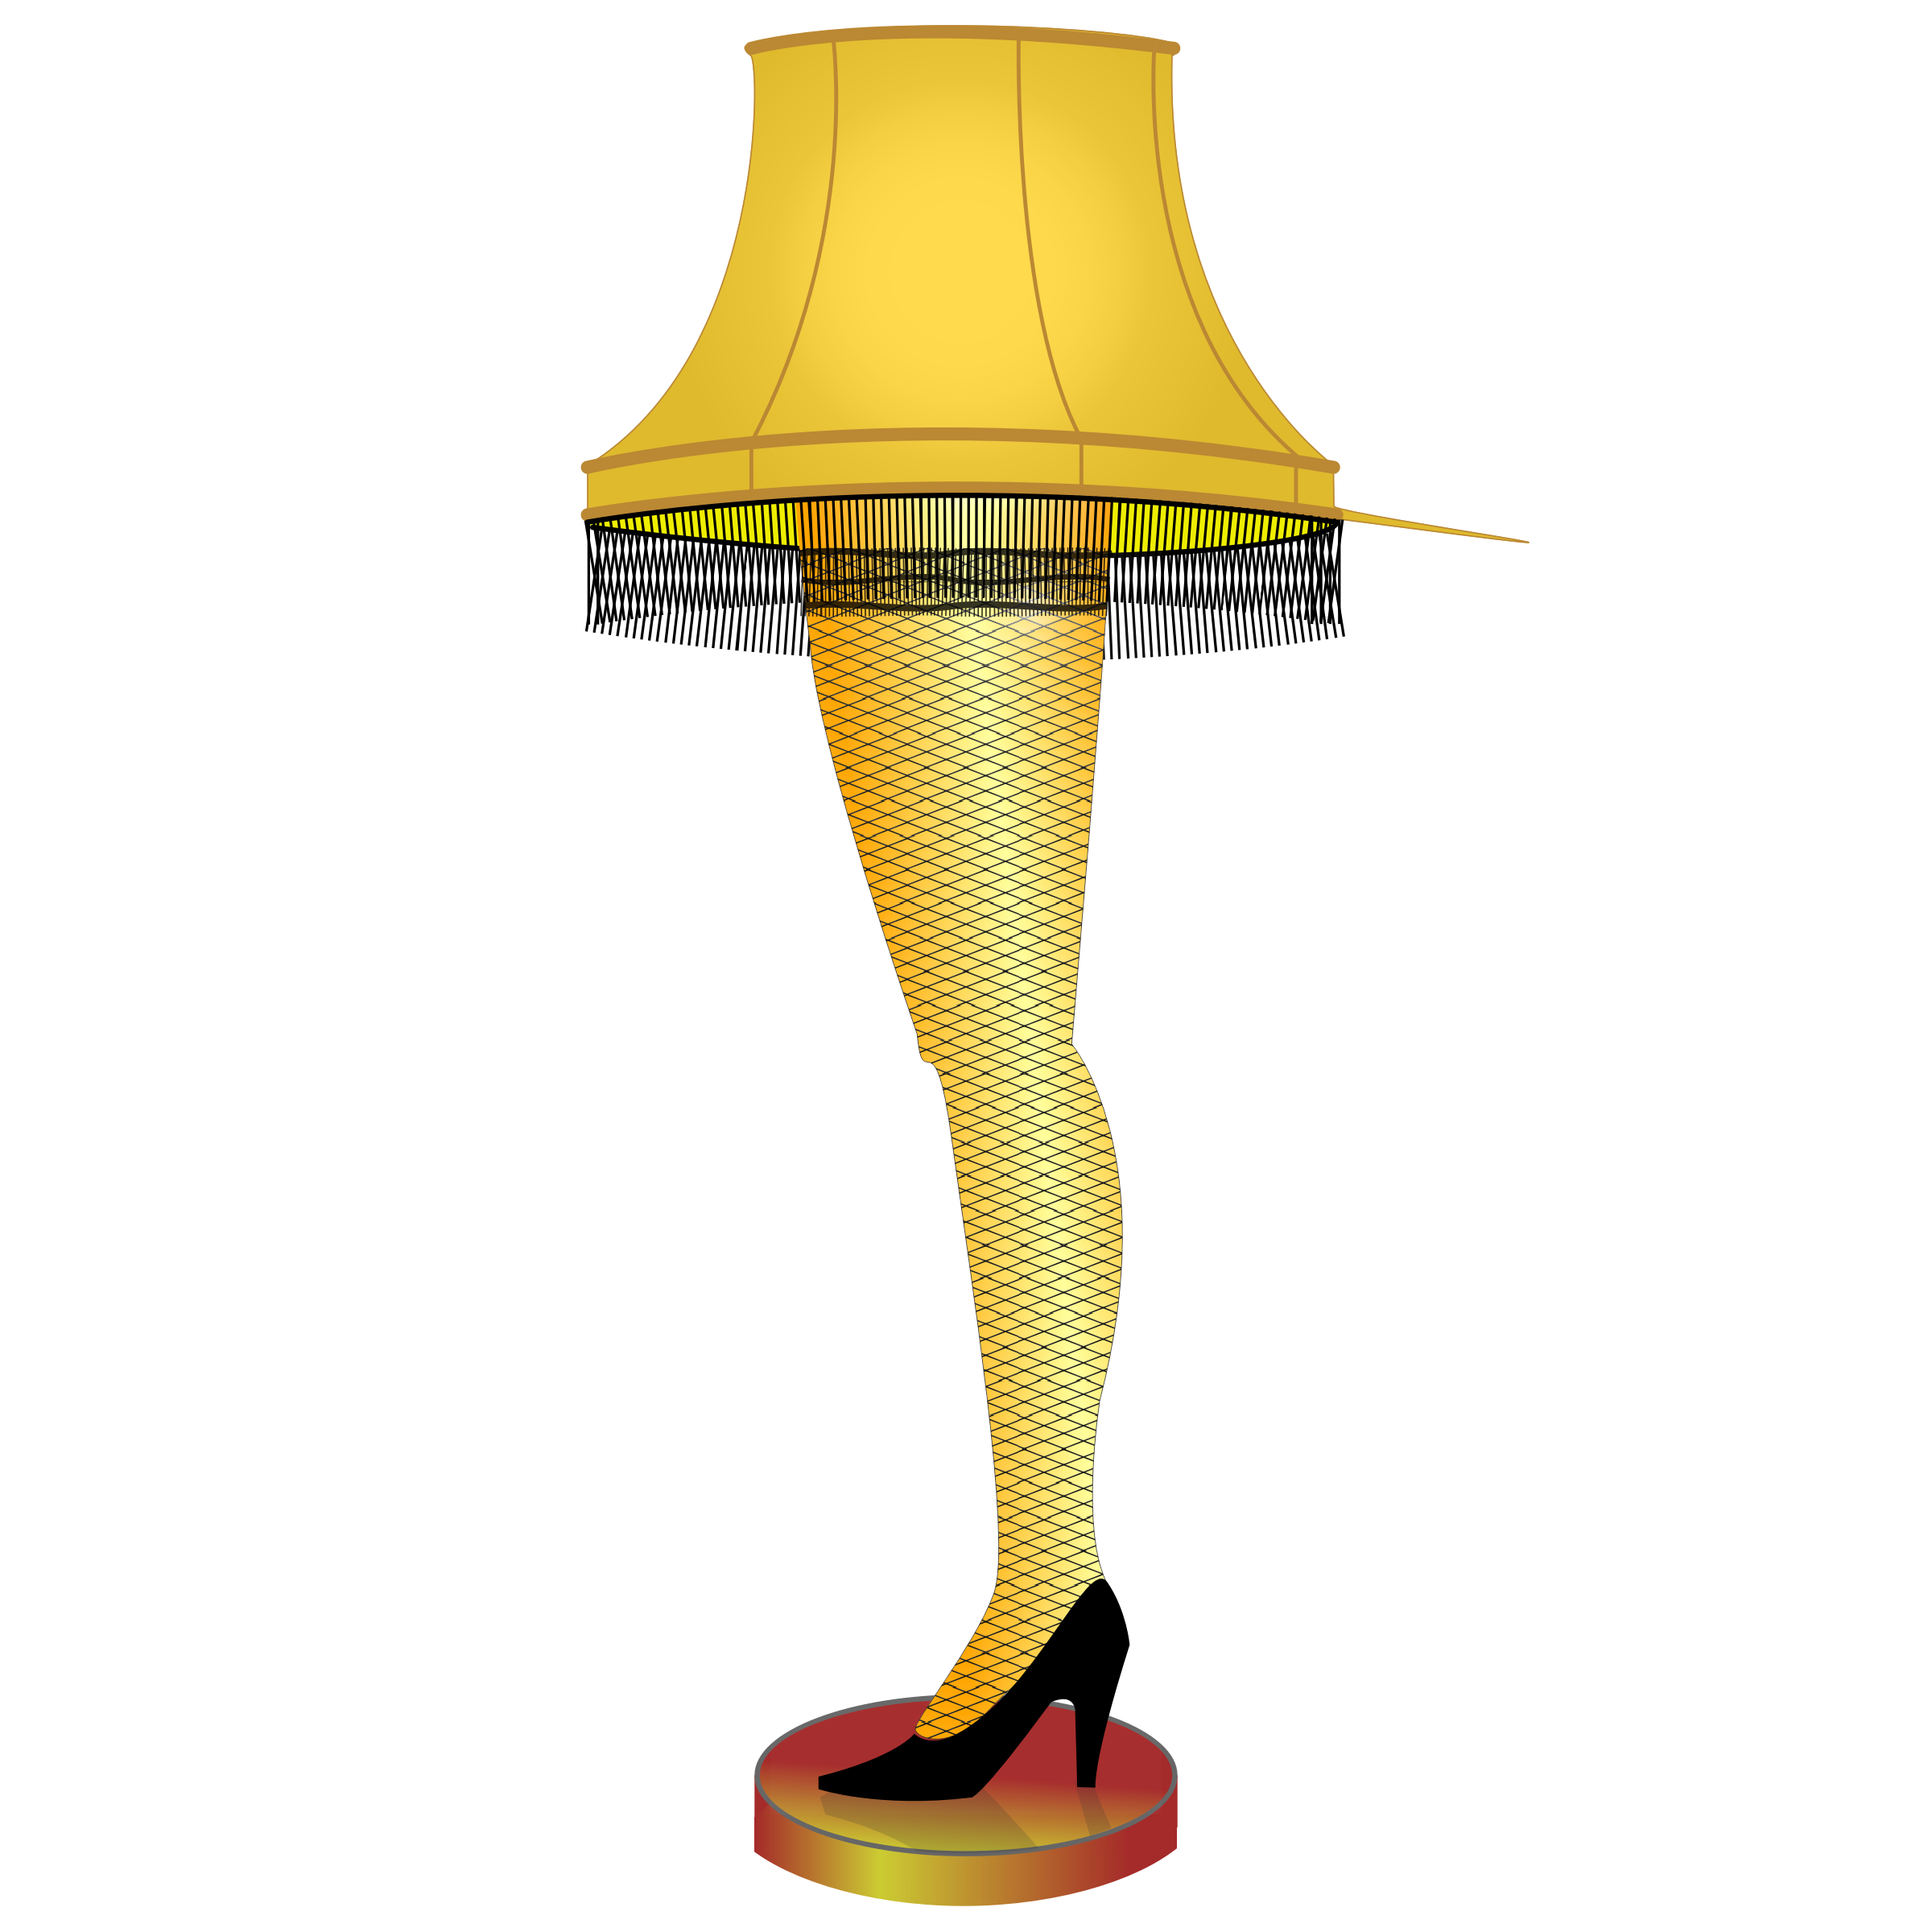 Leg lamp vector